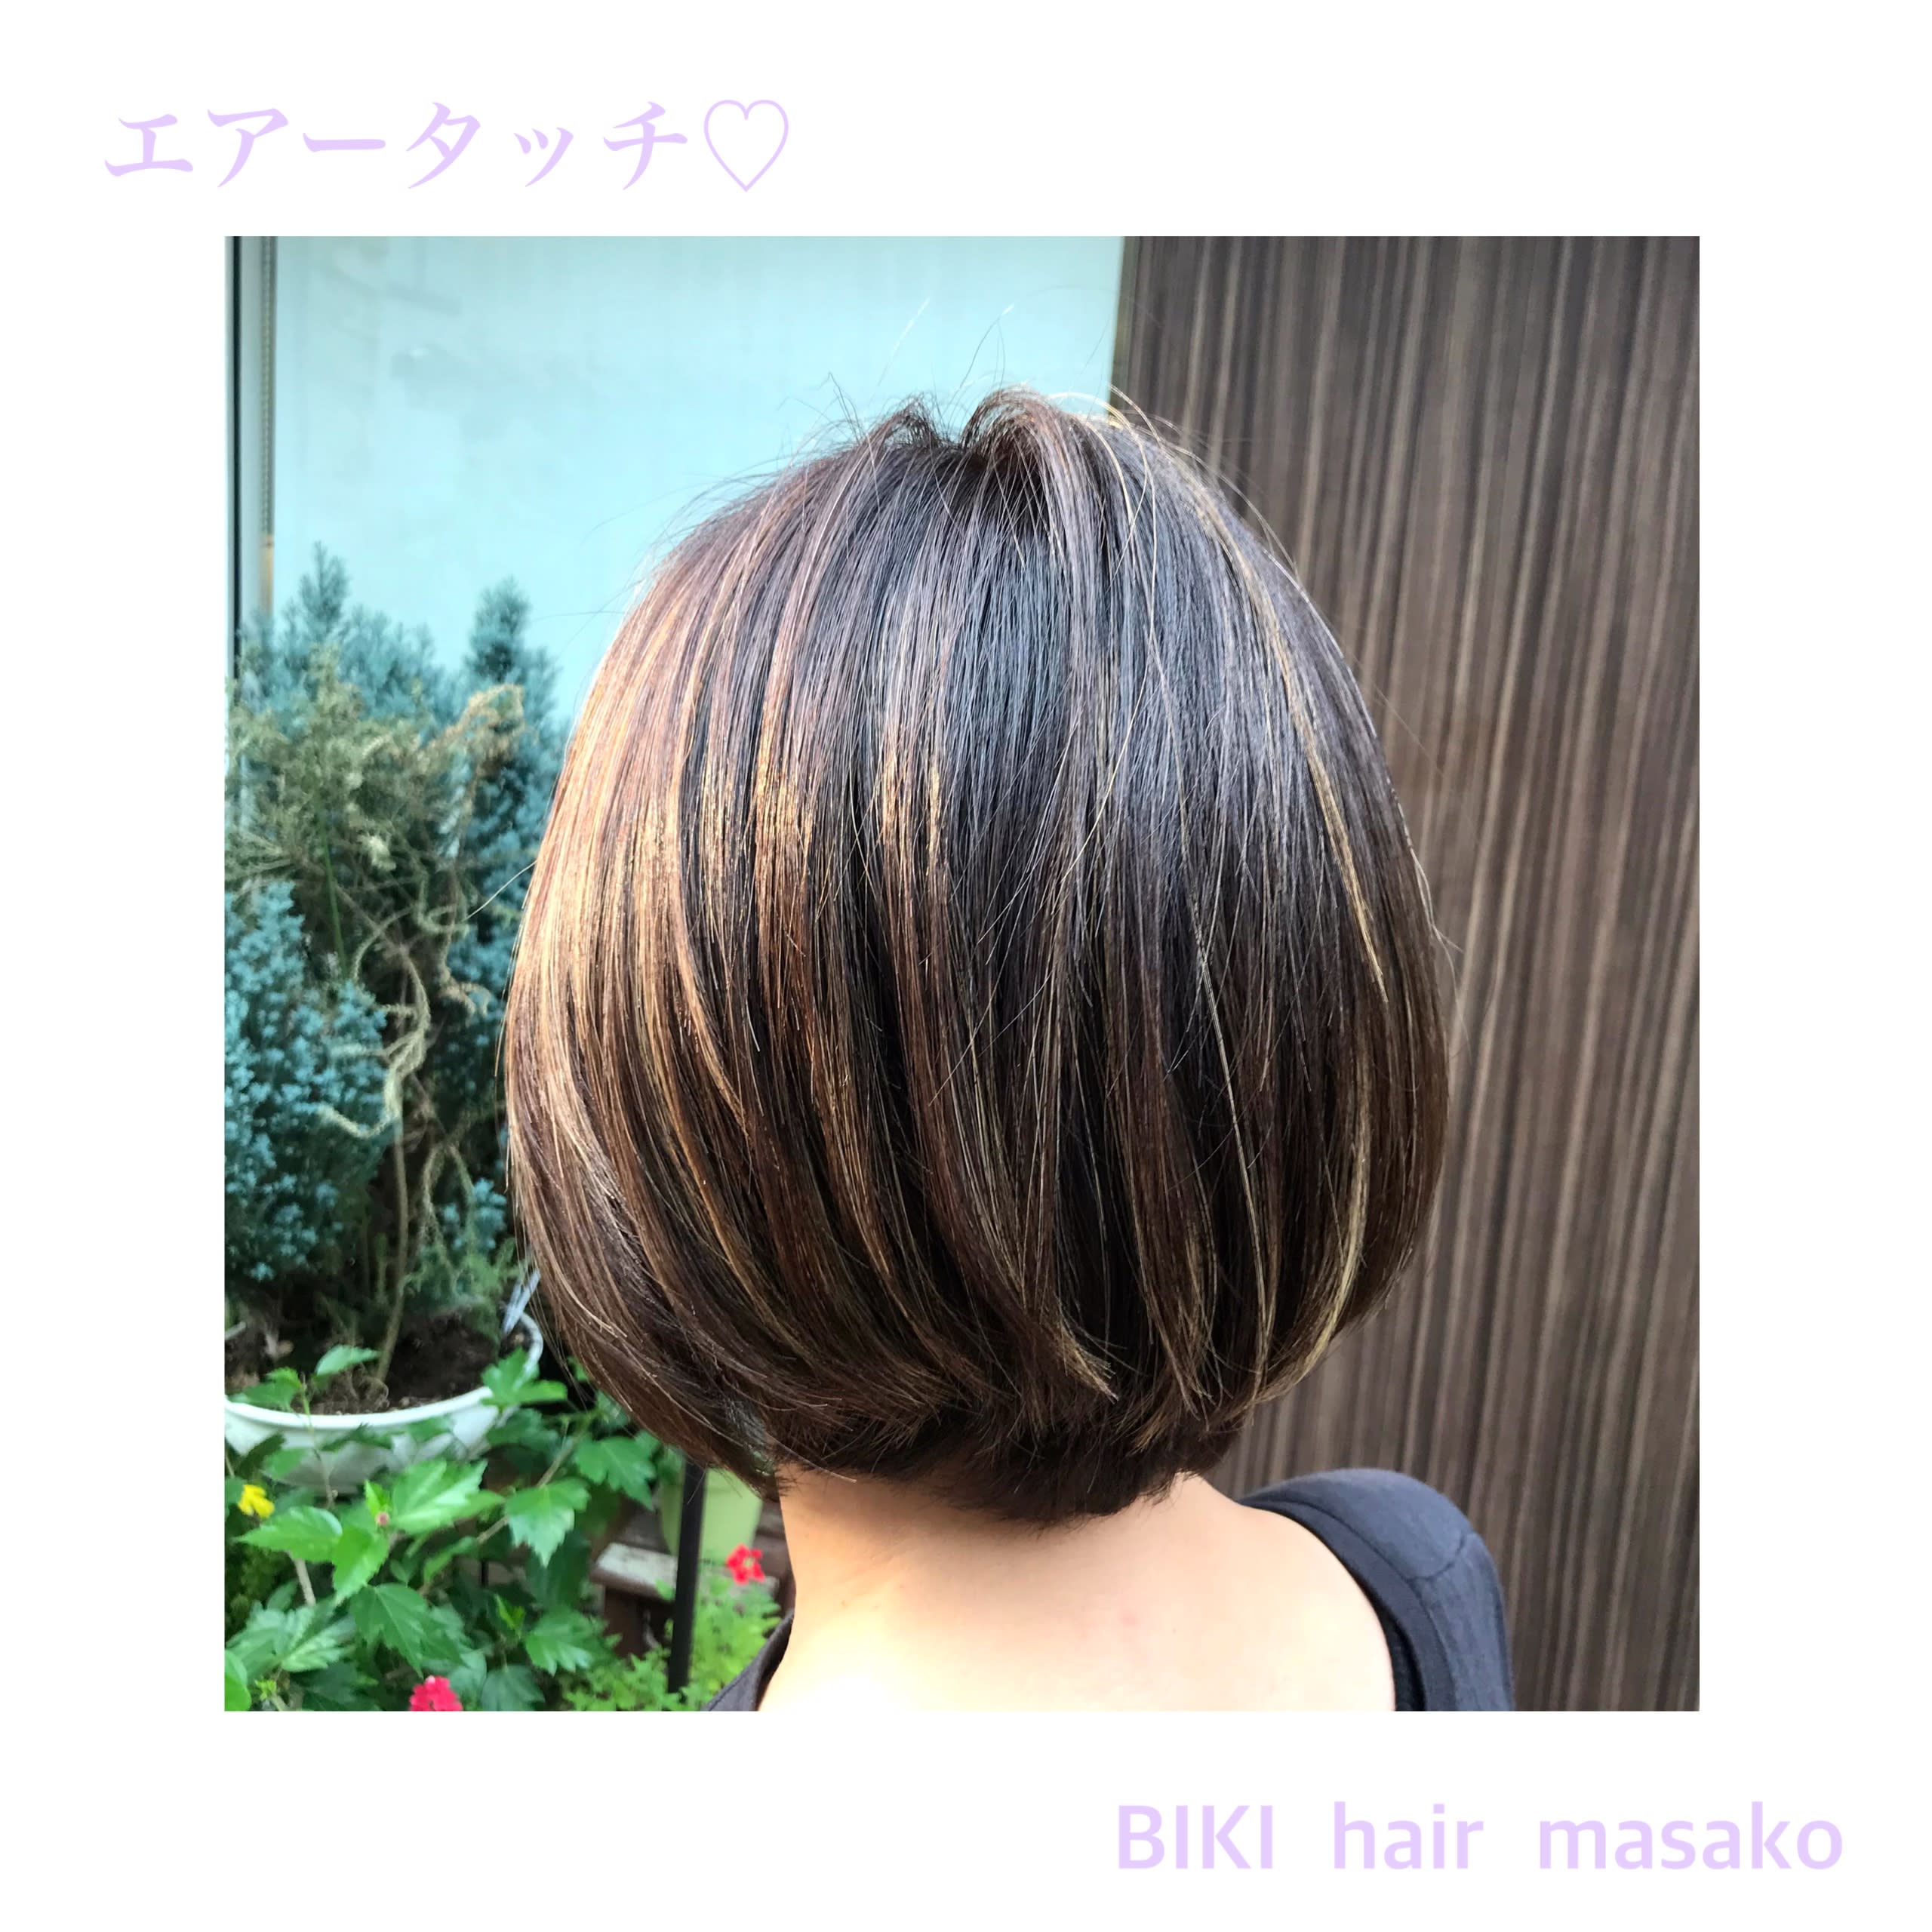 Biki Hair【ビキヘア】のスタイル紹介。エアータッチ×ボブ